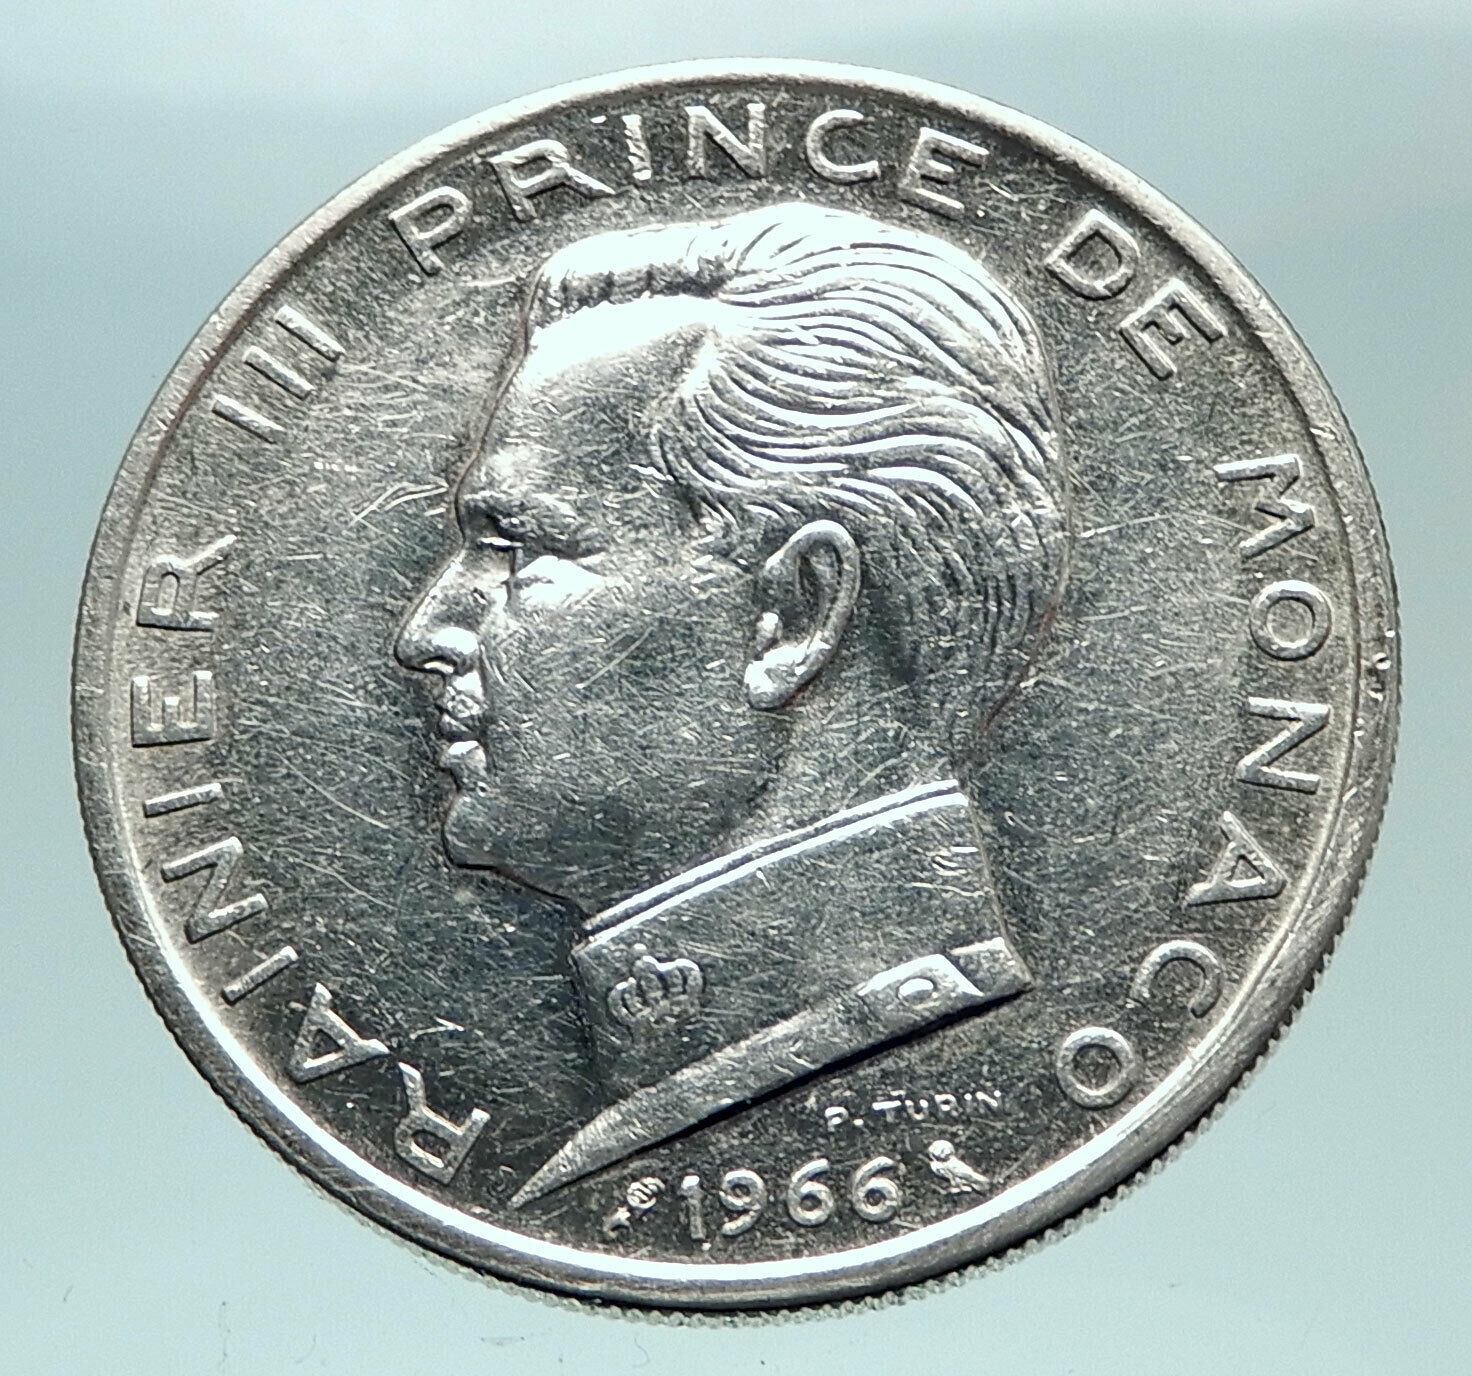 1966 MONACO King Rainier III Crown Antique Genuine Silver 5 Franc Coin i81954